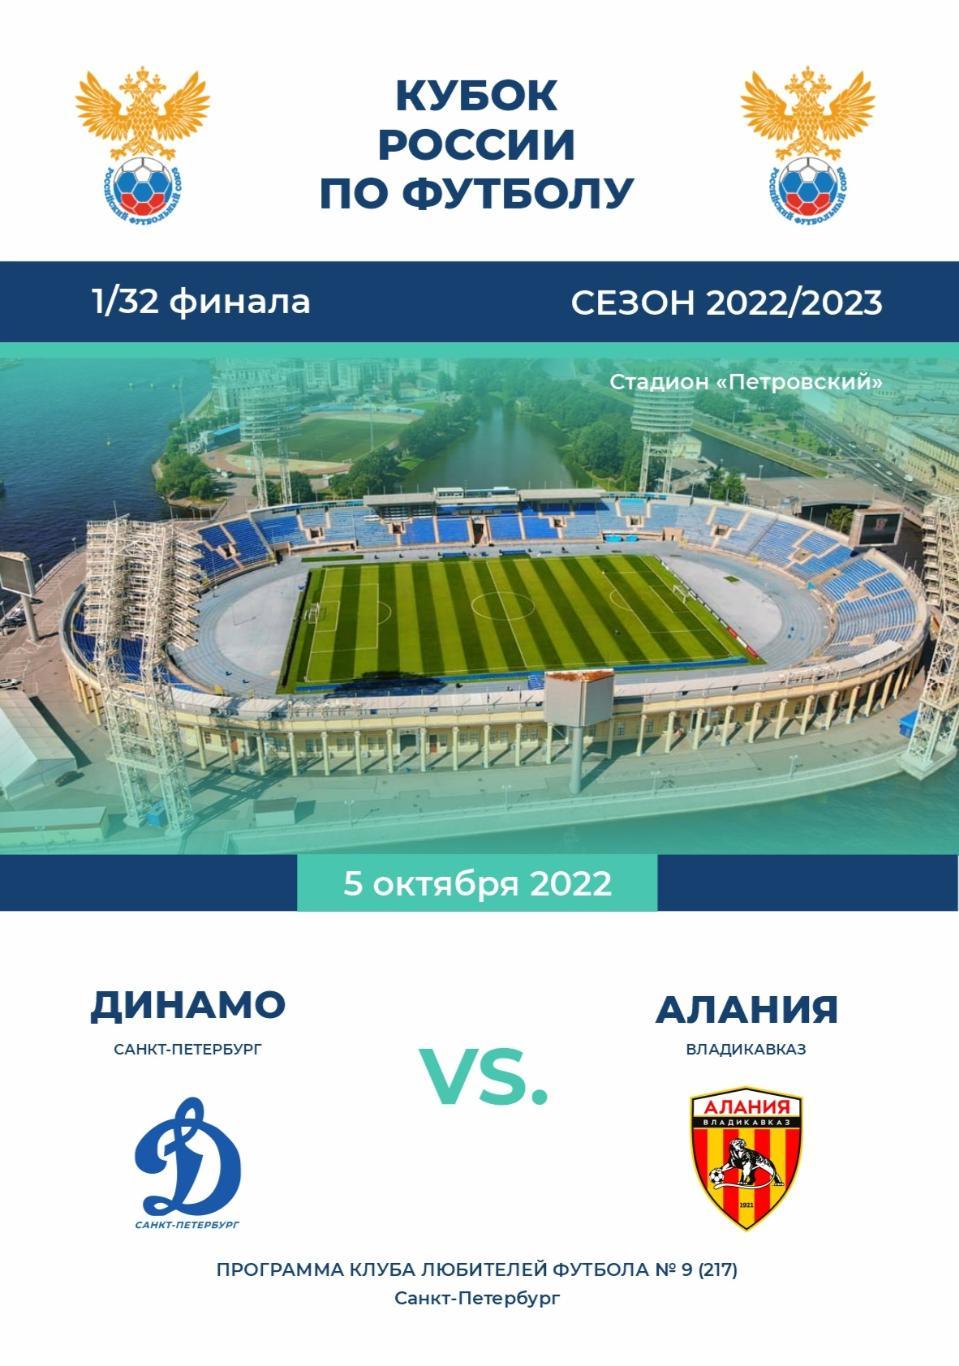 Динамо СПБ — Алания Владикавказ 05.10.2022. Программа КЛФ